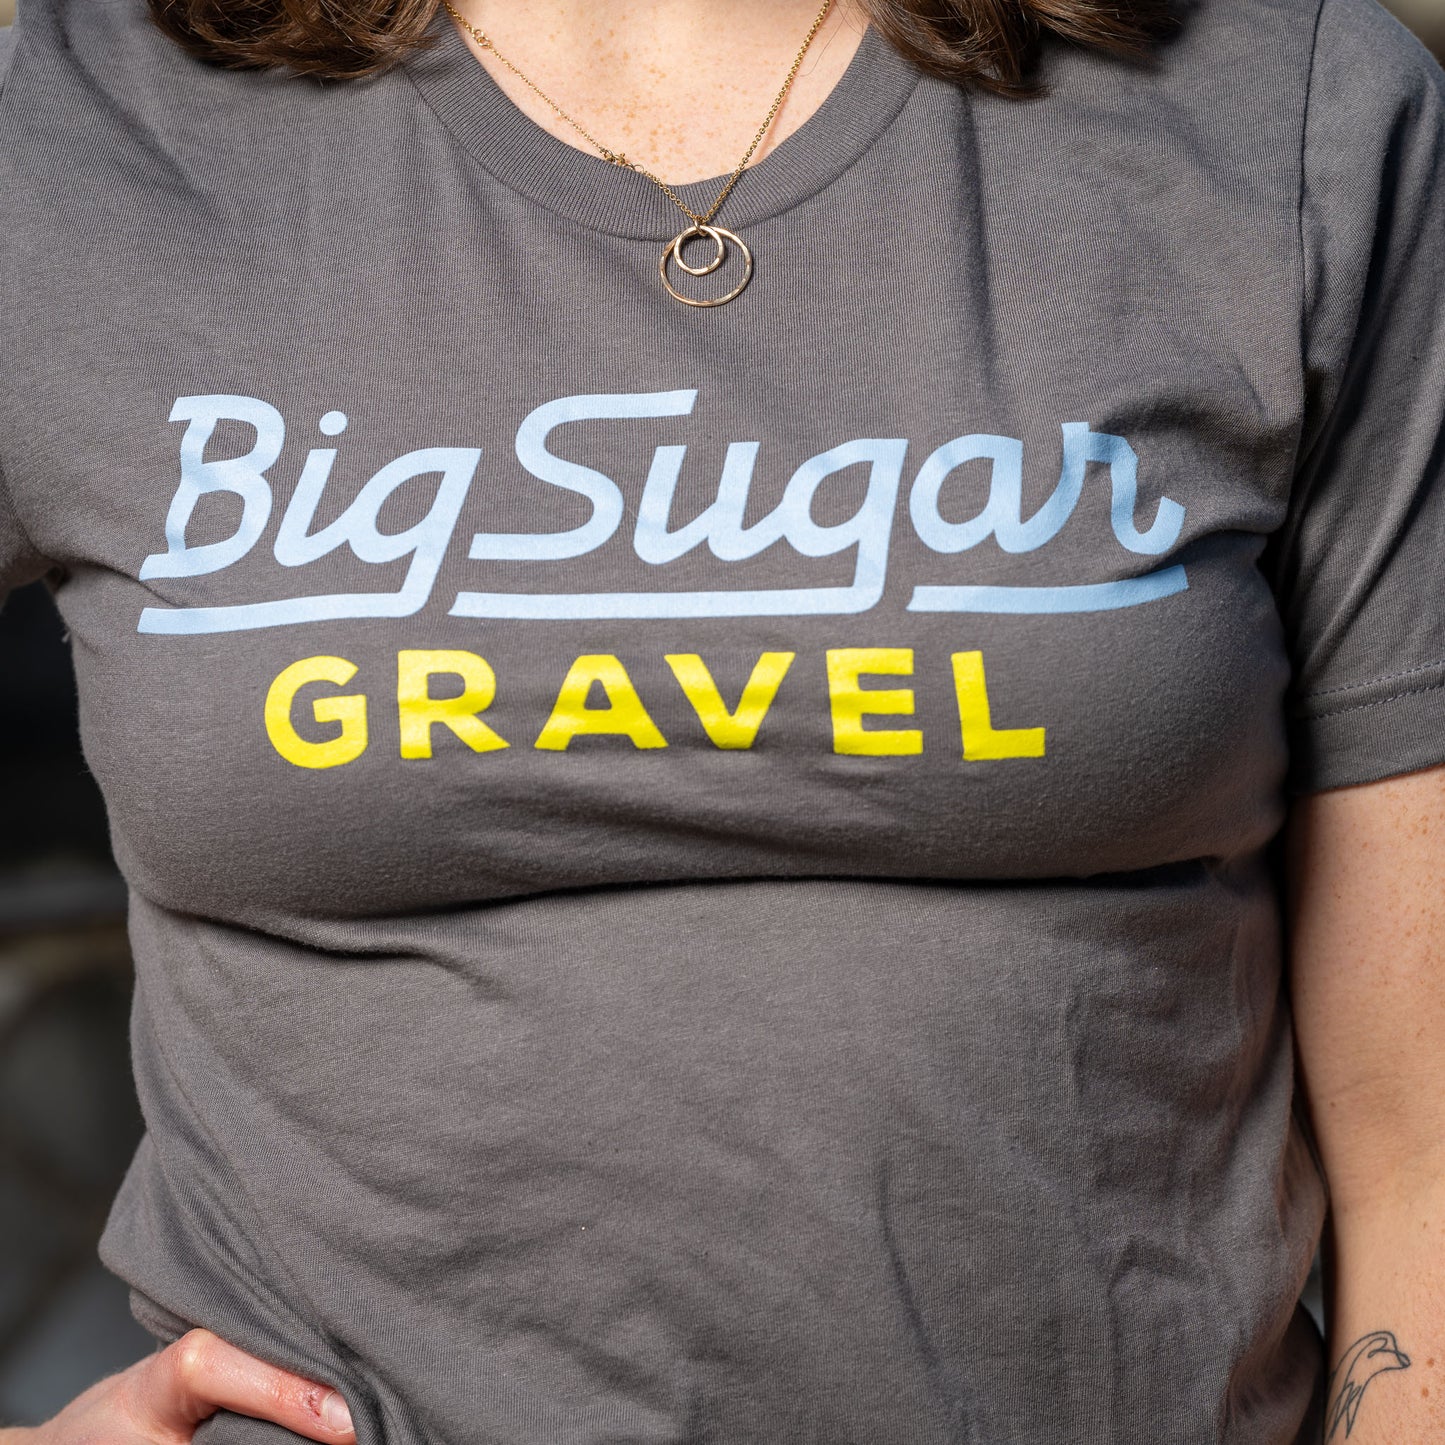 Big Sugar Gravel - Asphalt - Unisex Tee